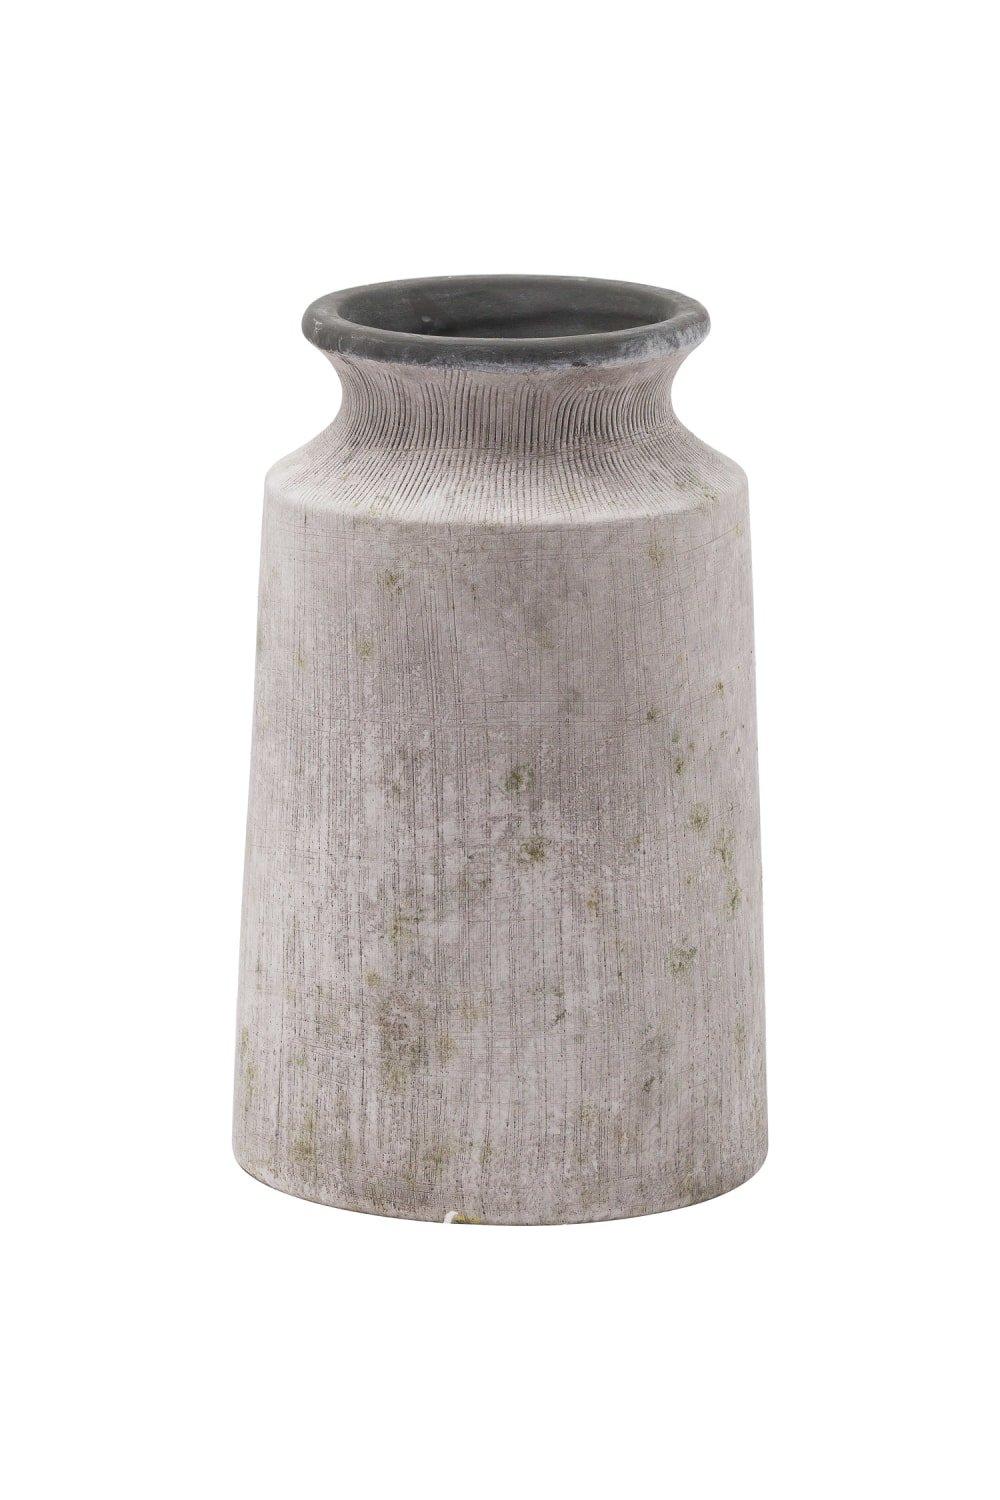 Bloomville Stone Urn Vase